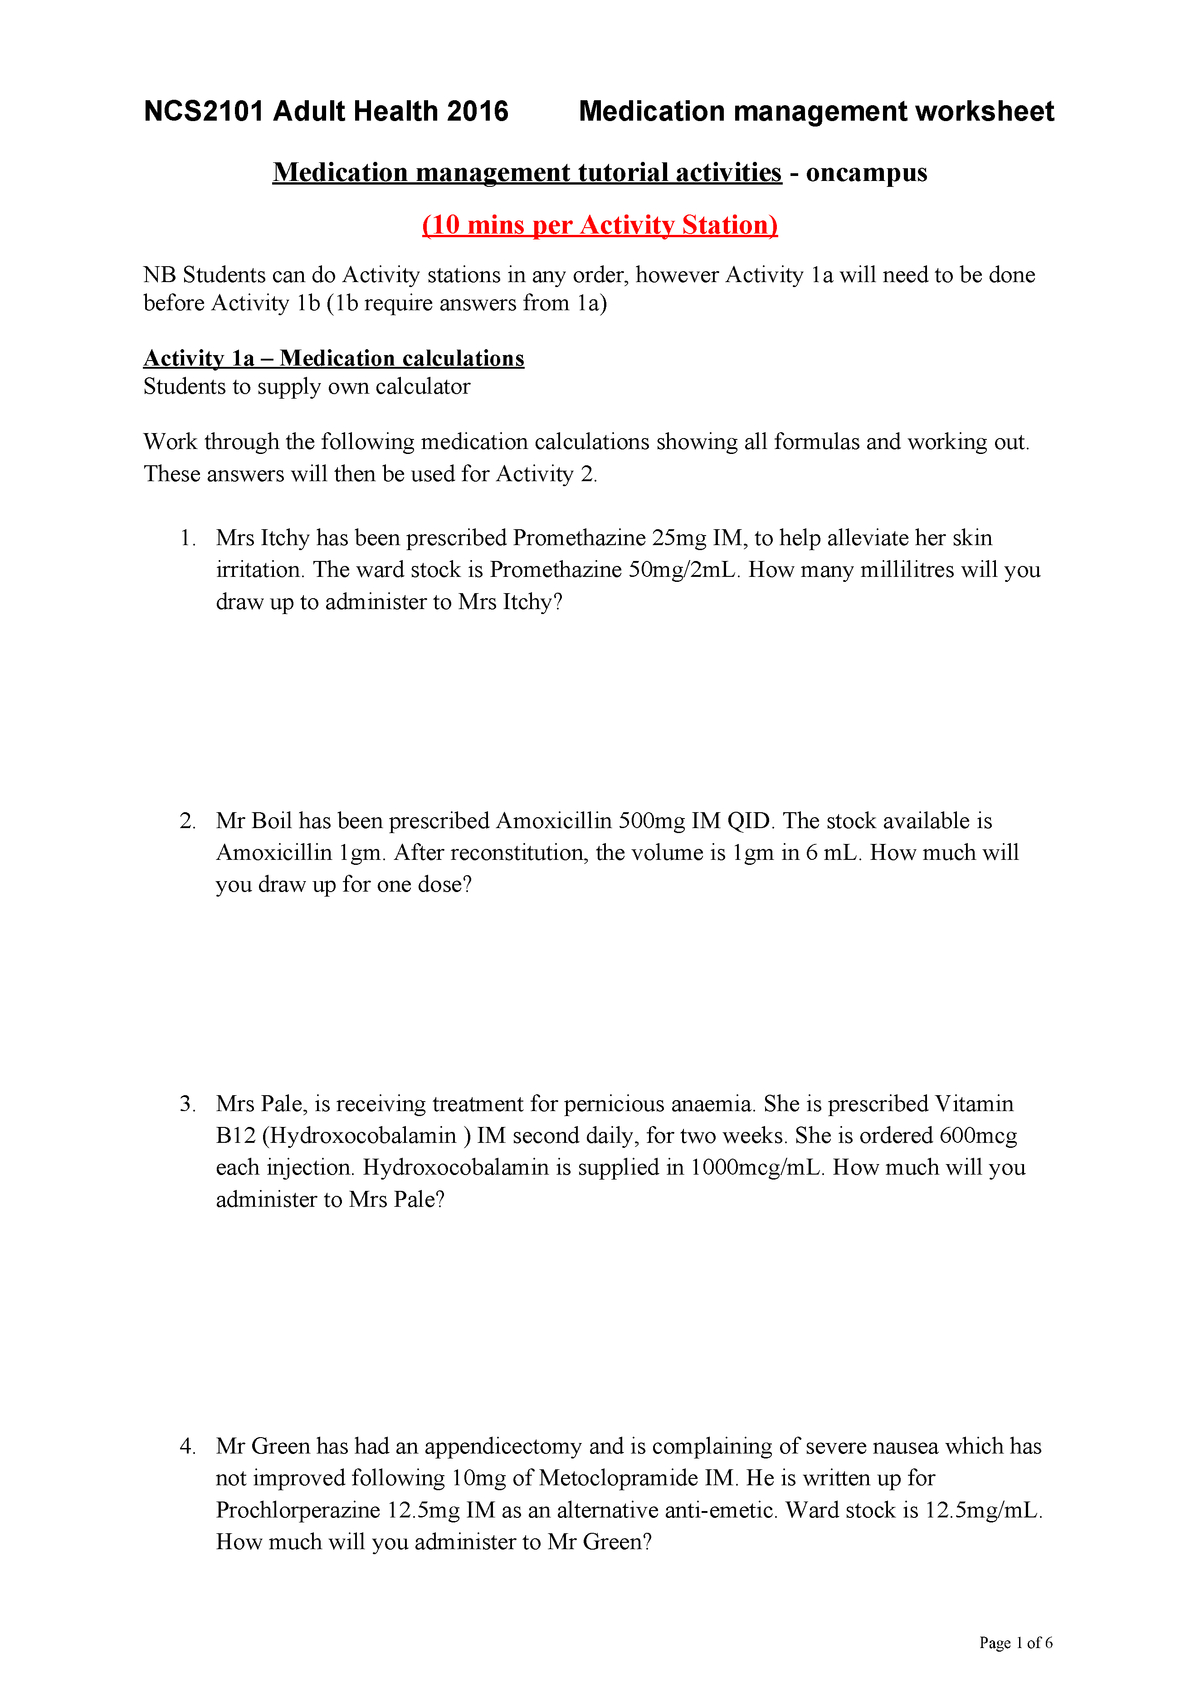 Medication Management Worksheet  Oncampus Students  Ncs2101 Adult In Medication Management Worksheets Activities